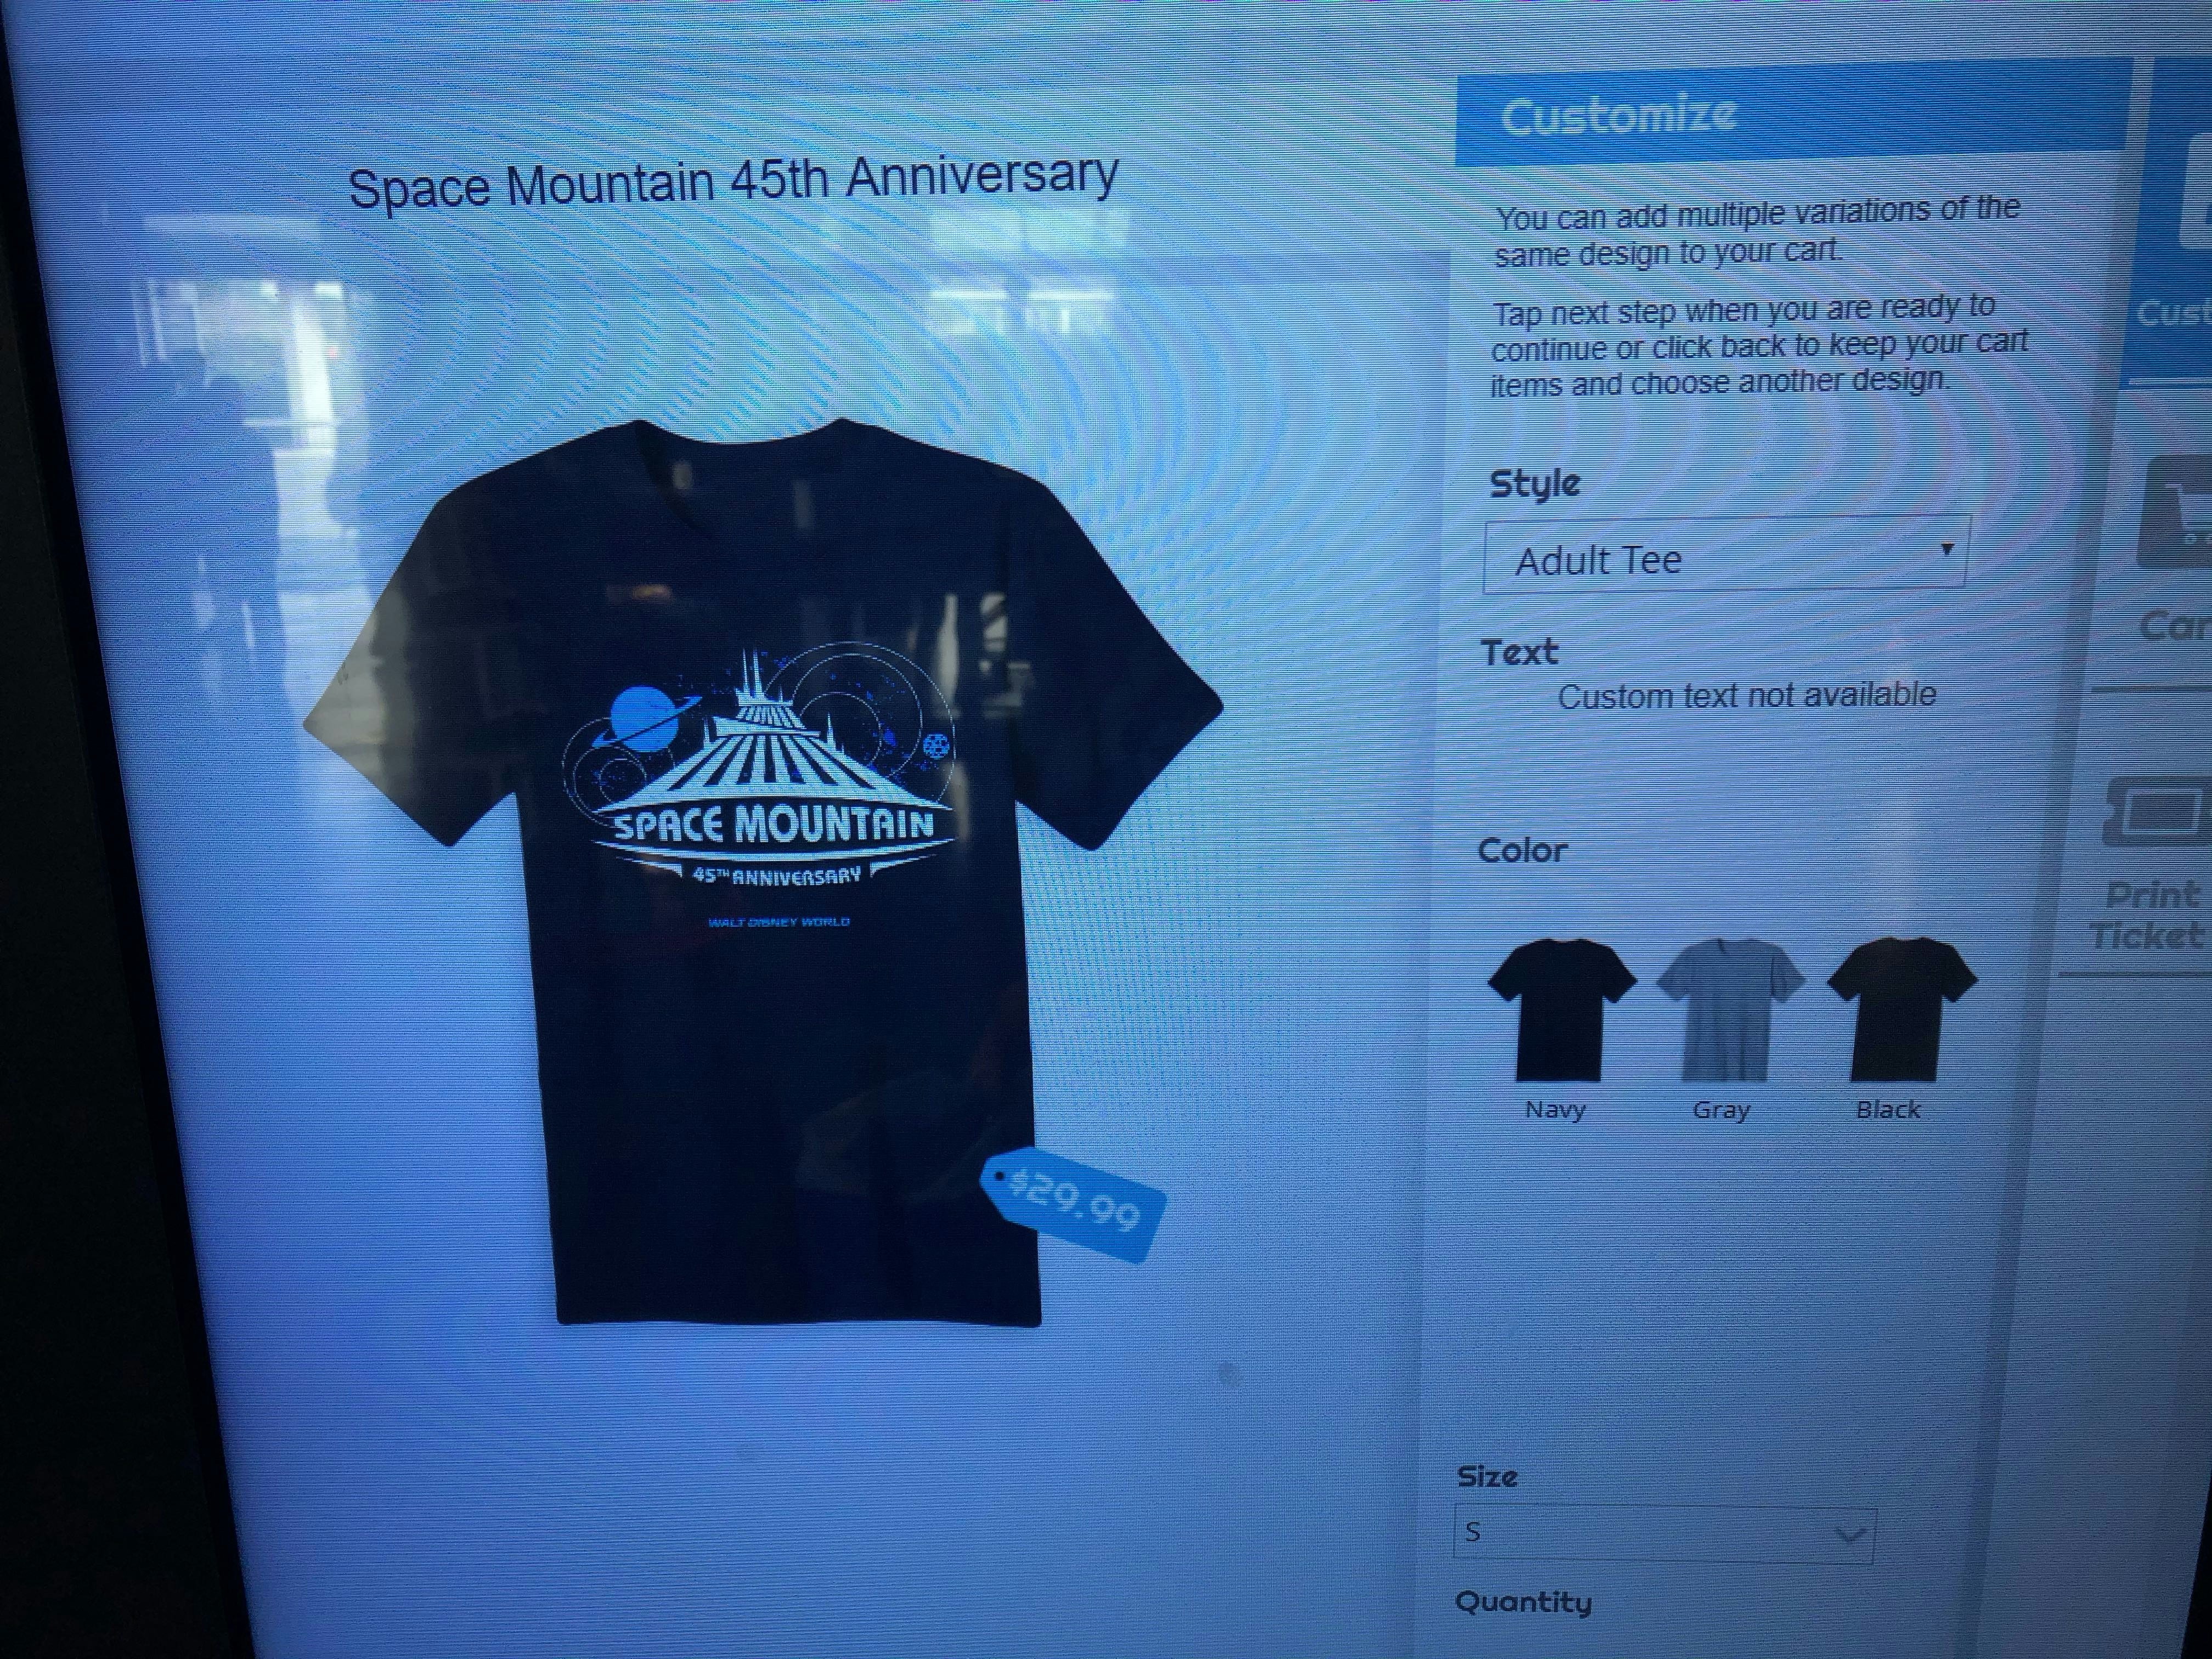 space mountain carousel of progress 45th anniversary merchandise 2020 11.jpg?auto=compress%2Cformat&ixlib=php 1.2